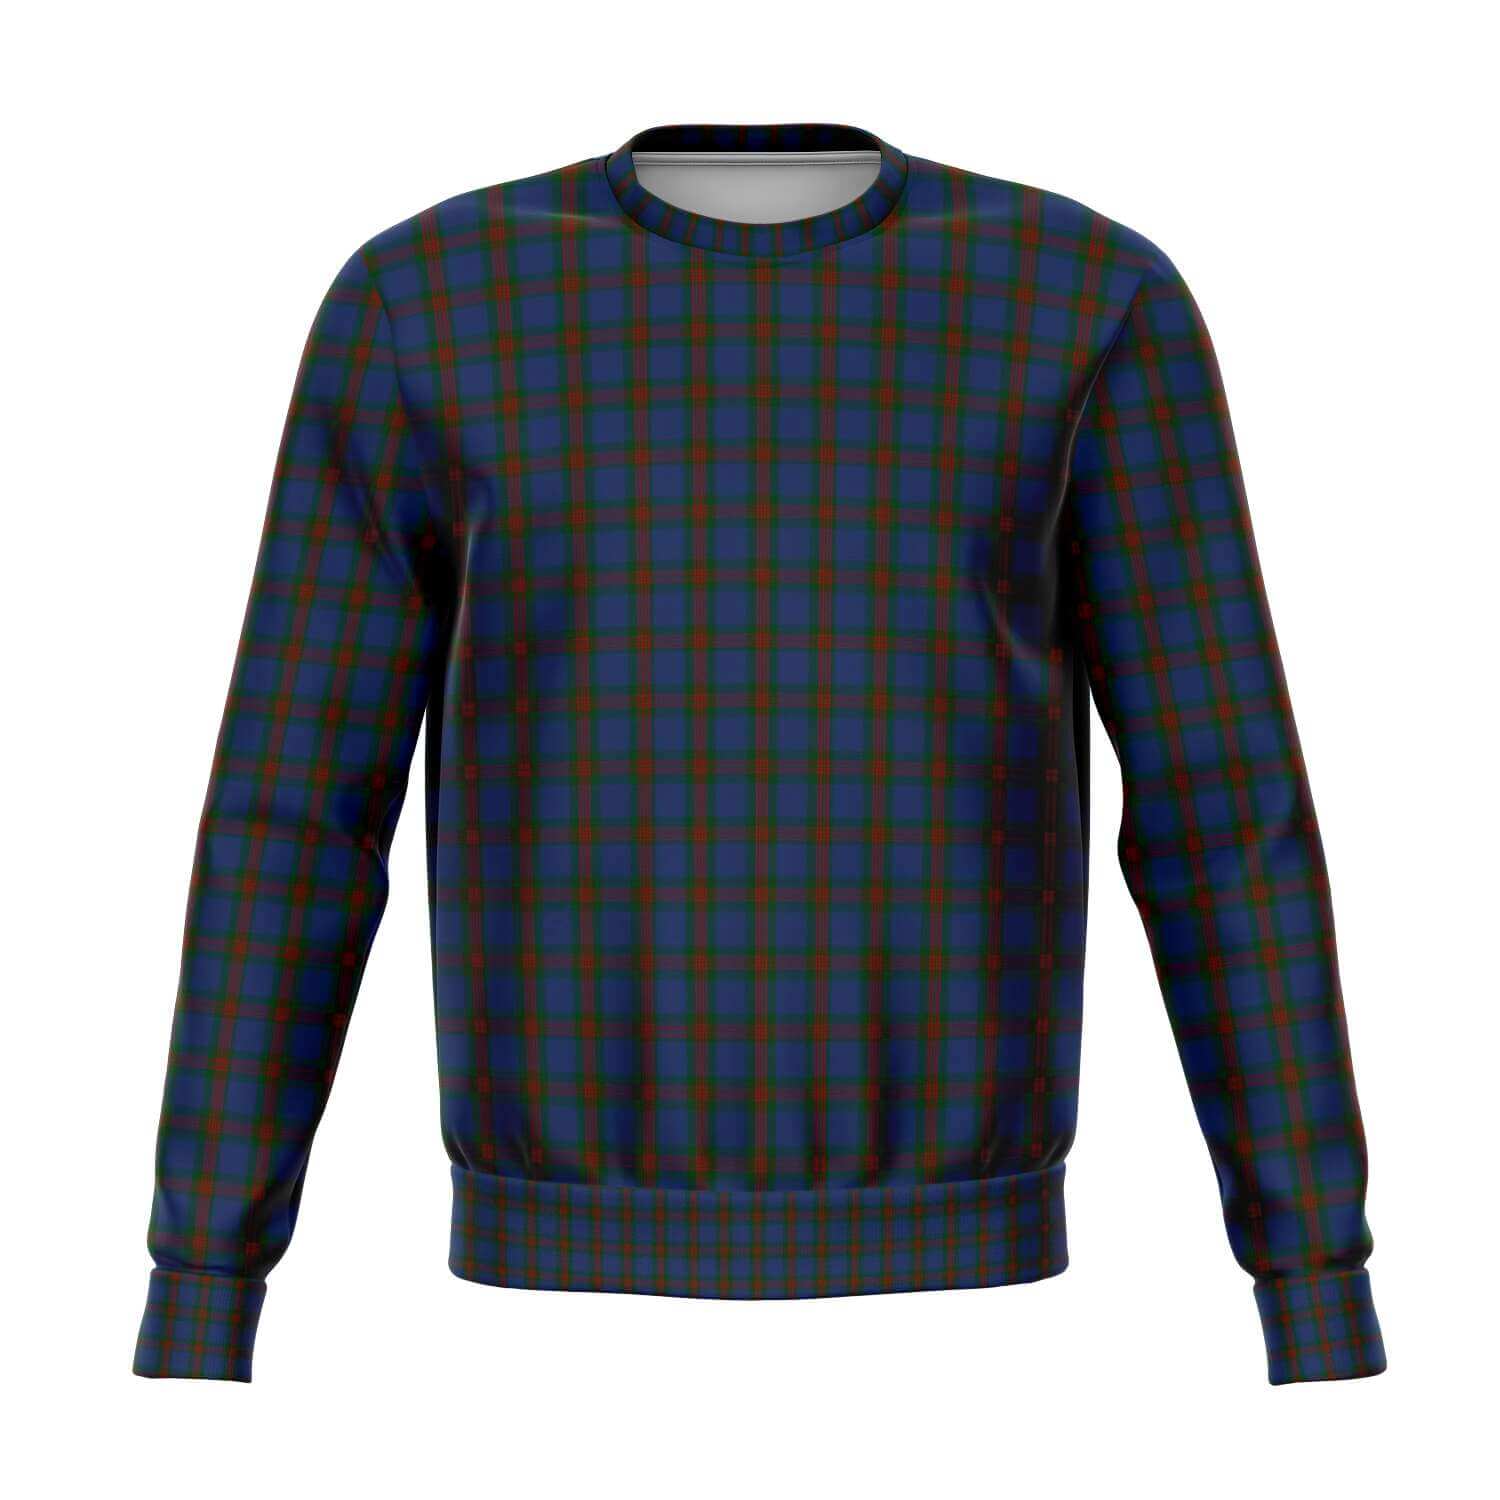 Wilson-Tartan-Athletic-Fashion-sweatshirts-front